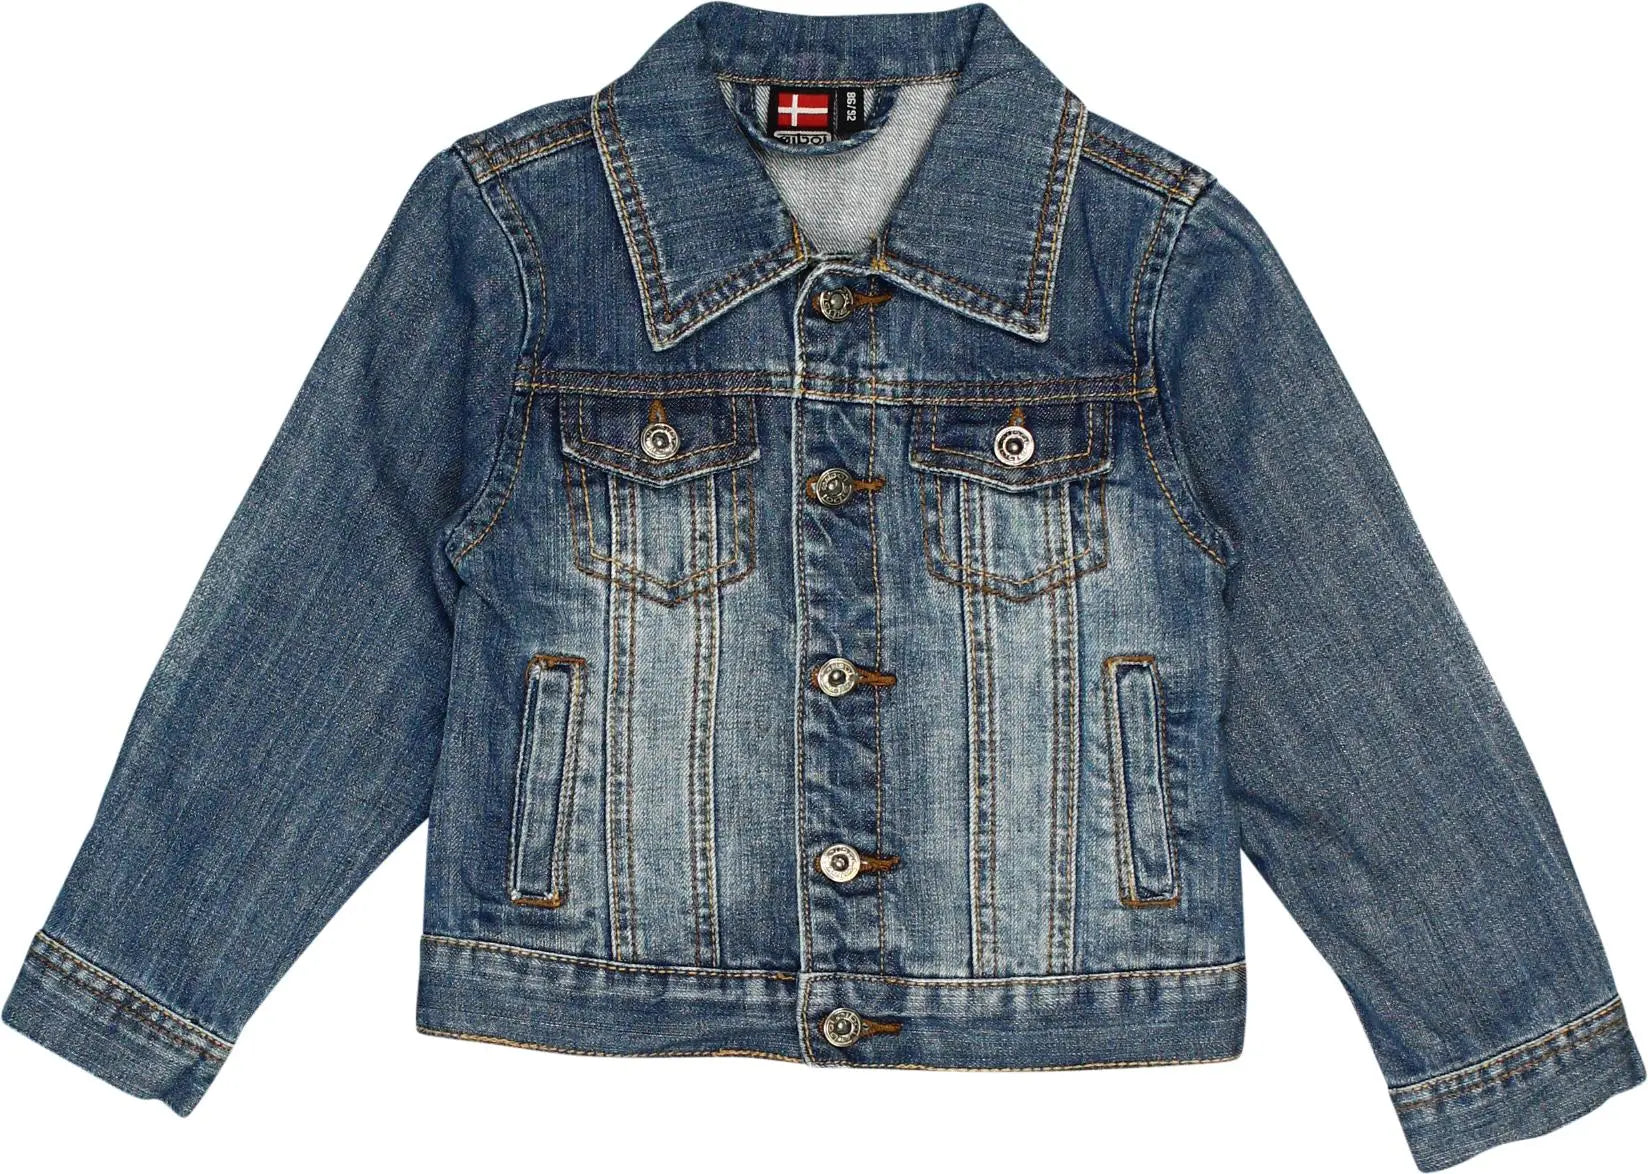 Oiboi - Denim Jacket- ThriftTale.com - Vintage and second handclothing